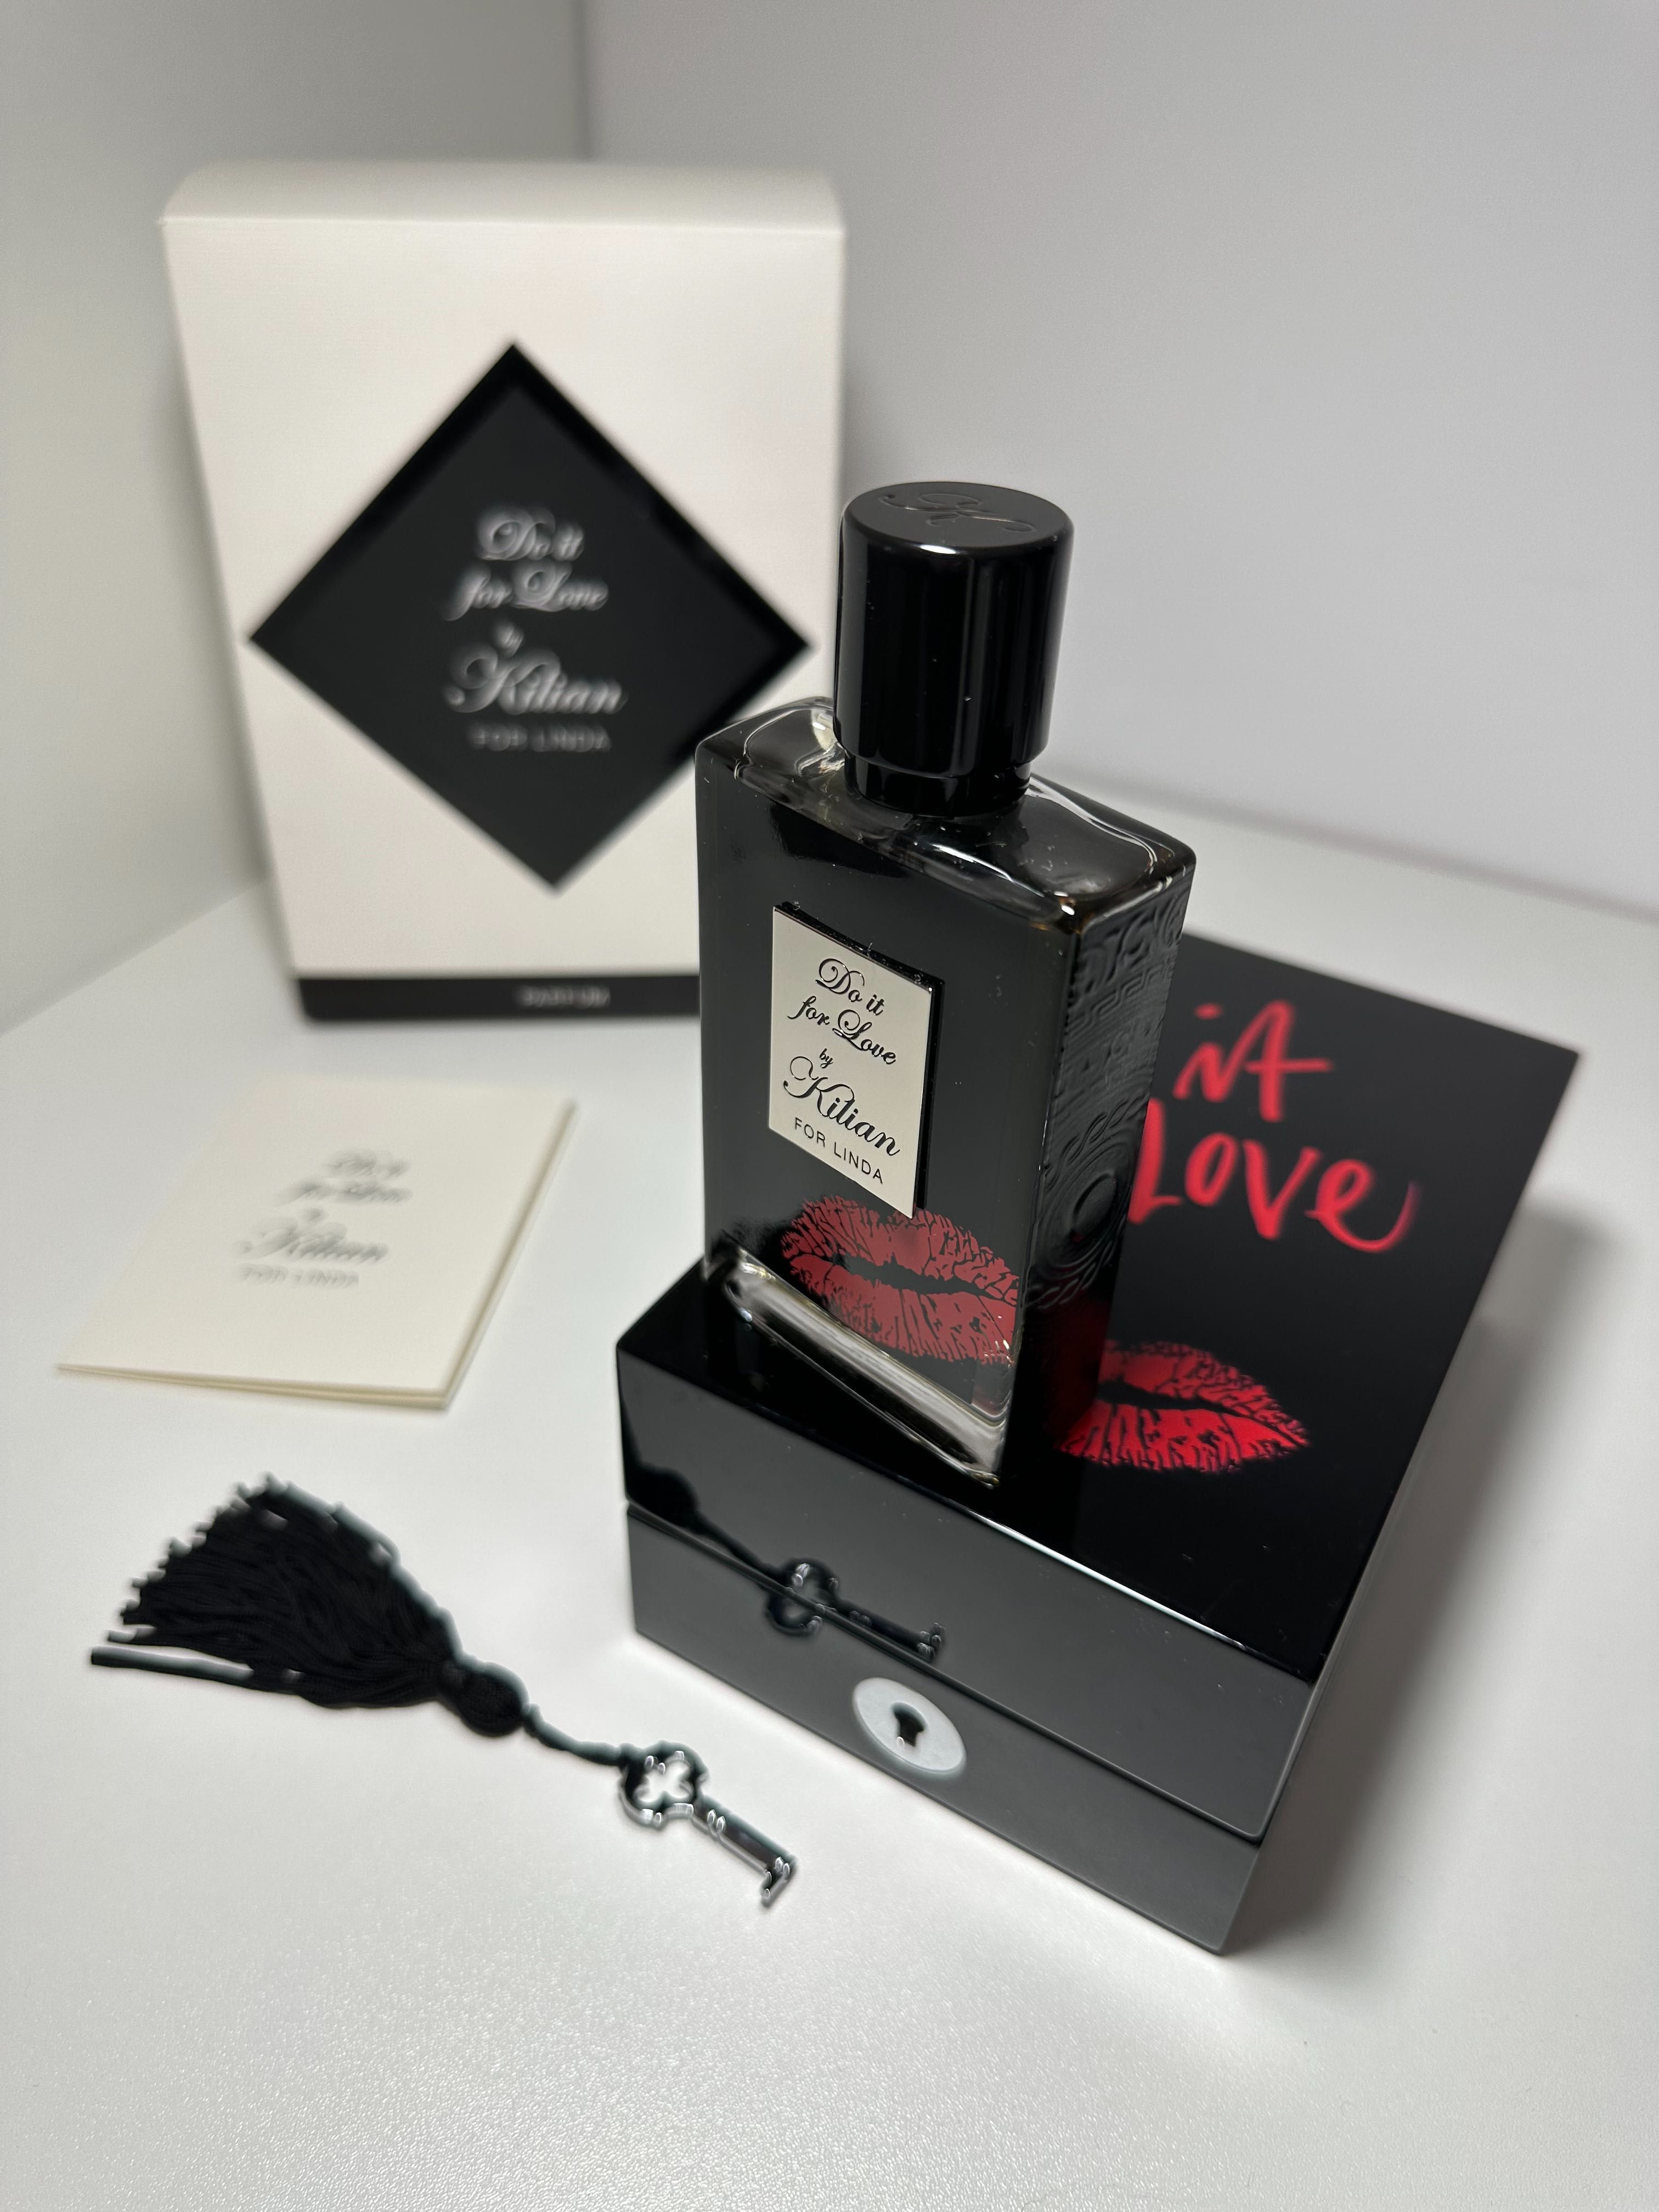 Kilian - Do it for Love for Linda - parfum 50 ml editie limitata